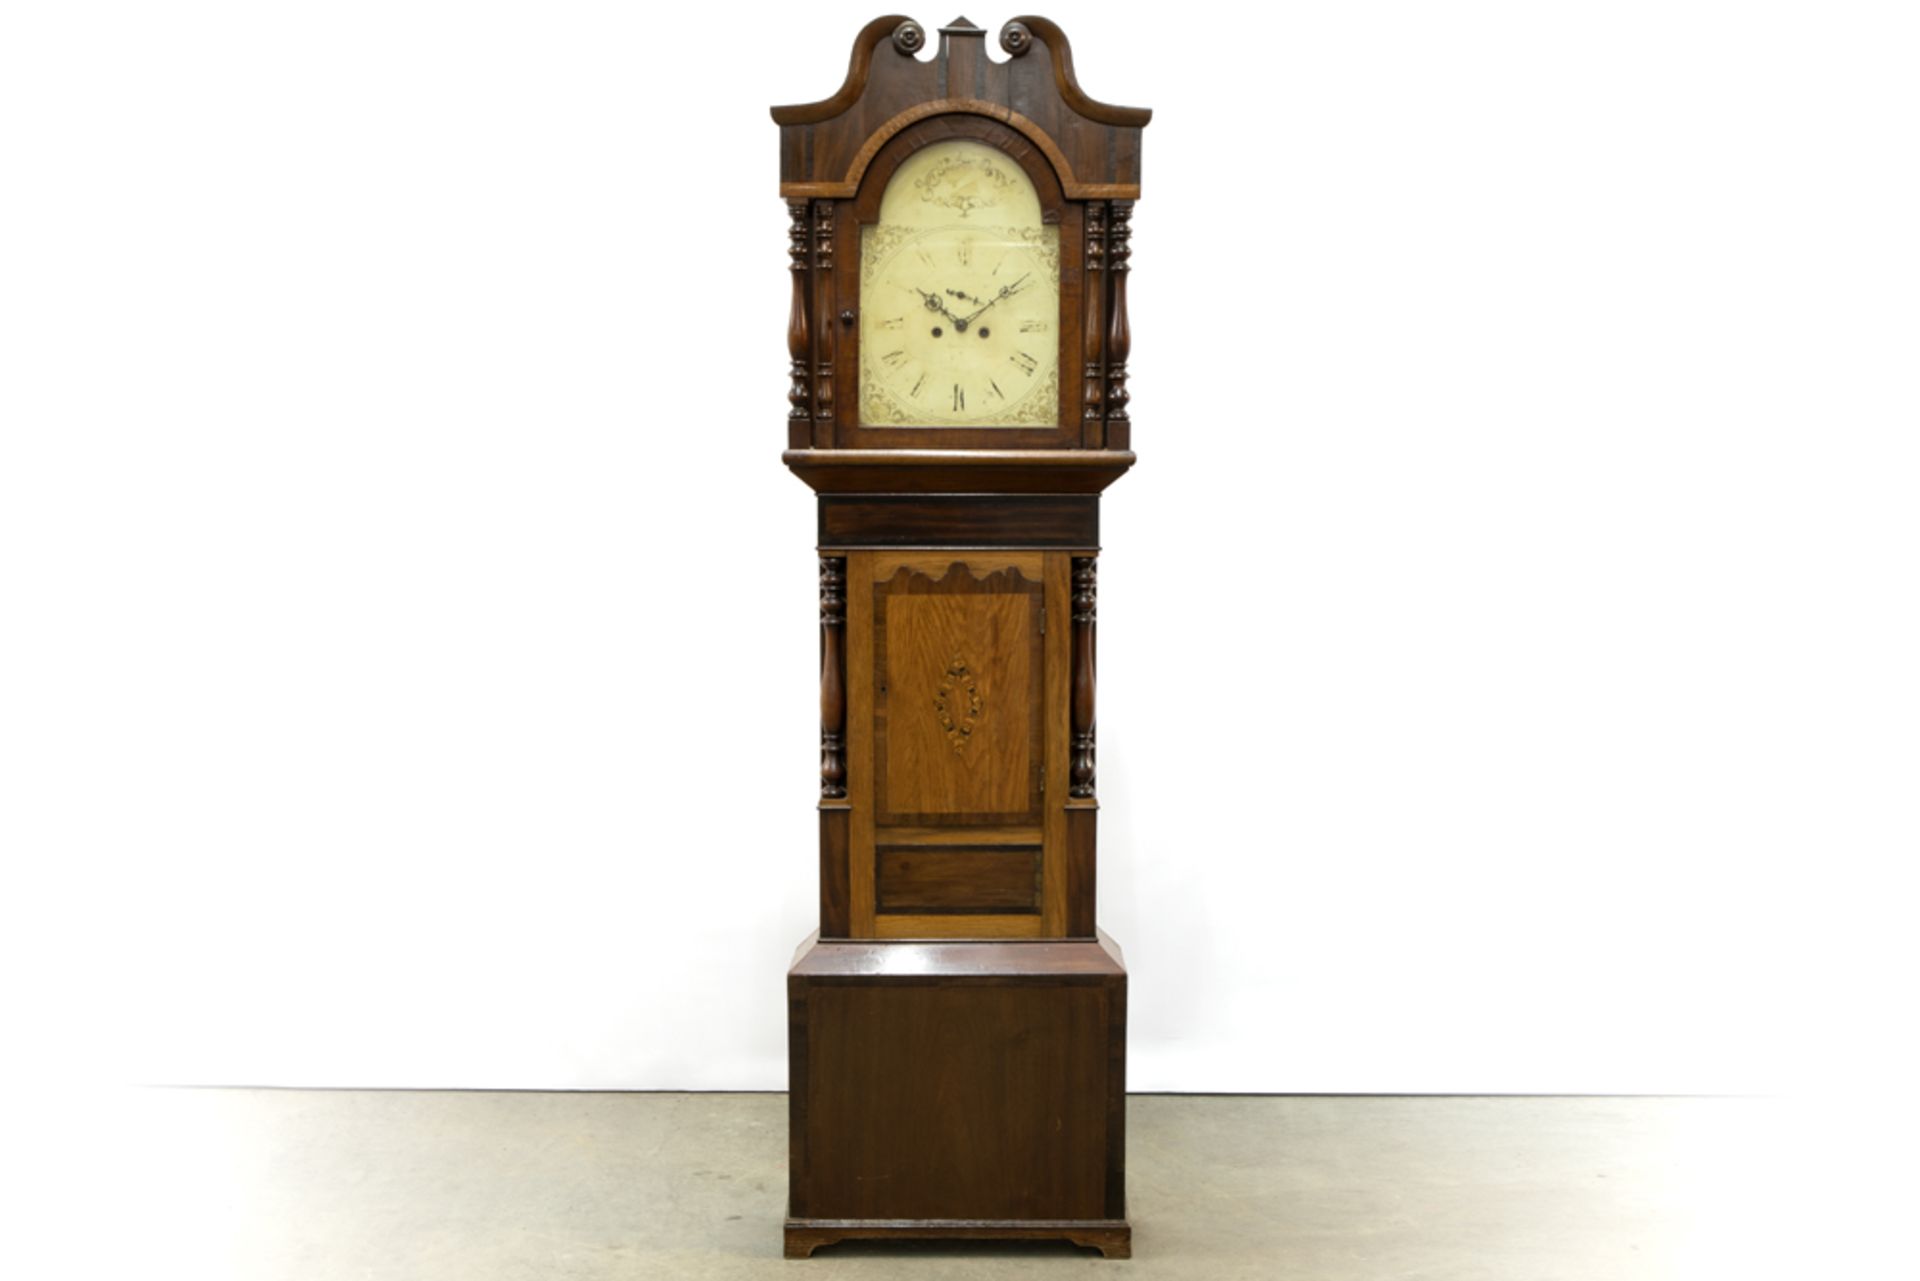 19th Cent. English longcase clock with case in mahogany and oak || Vrij imposante negentiende eeuwse